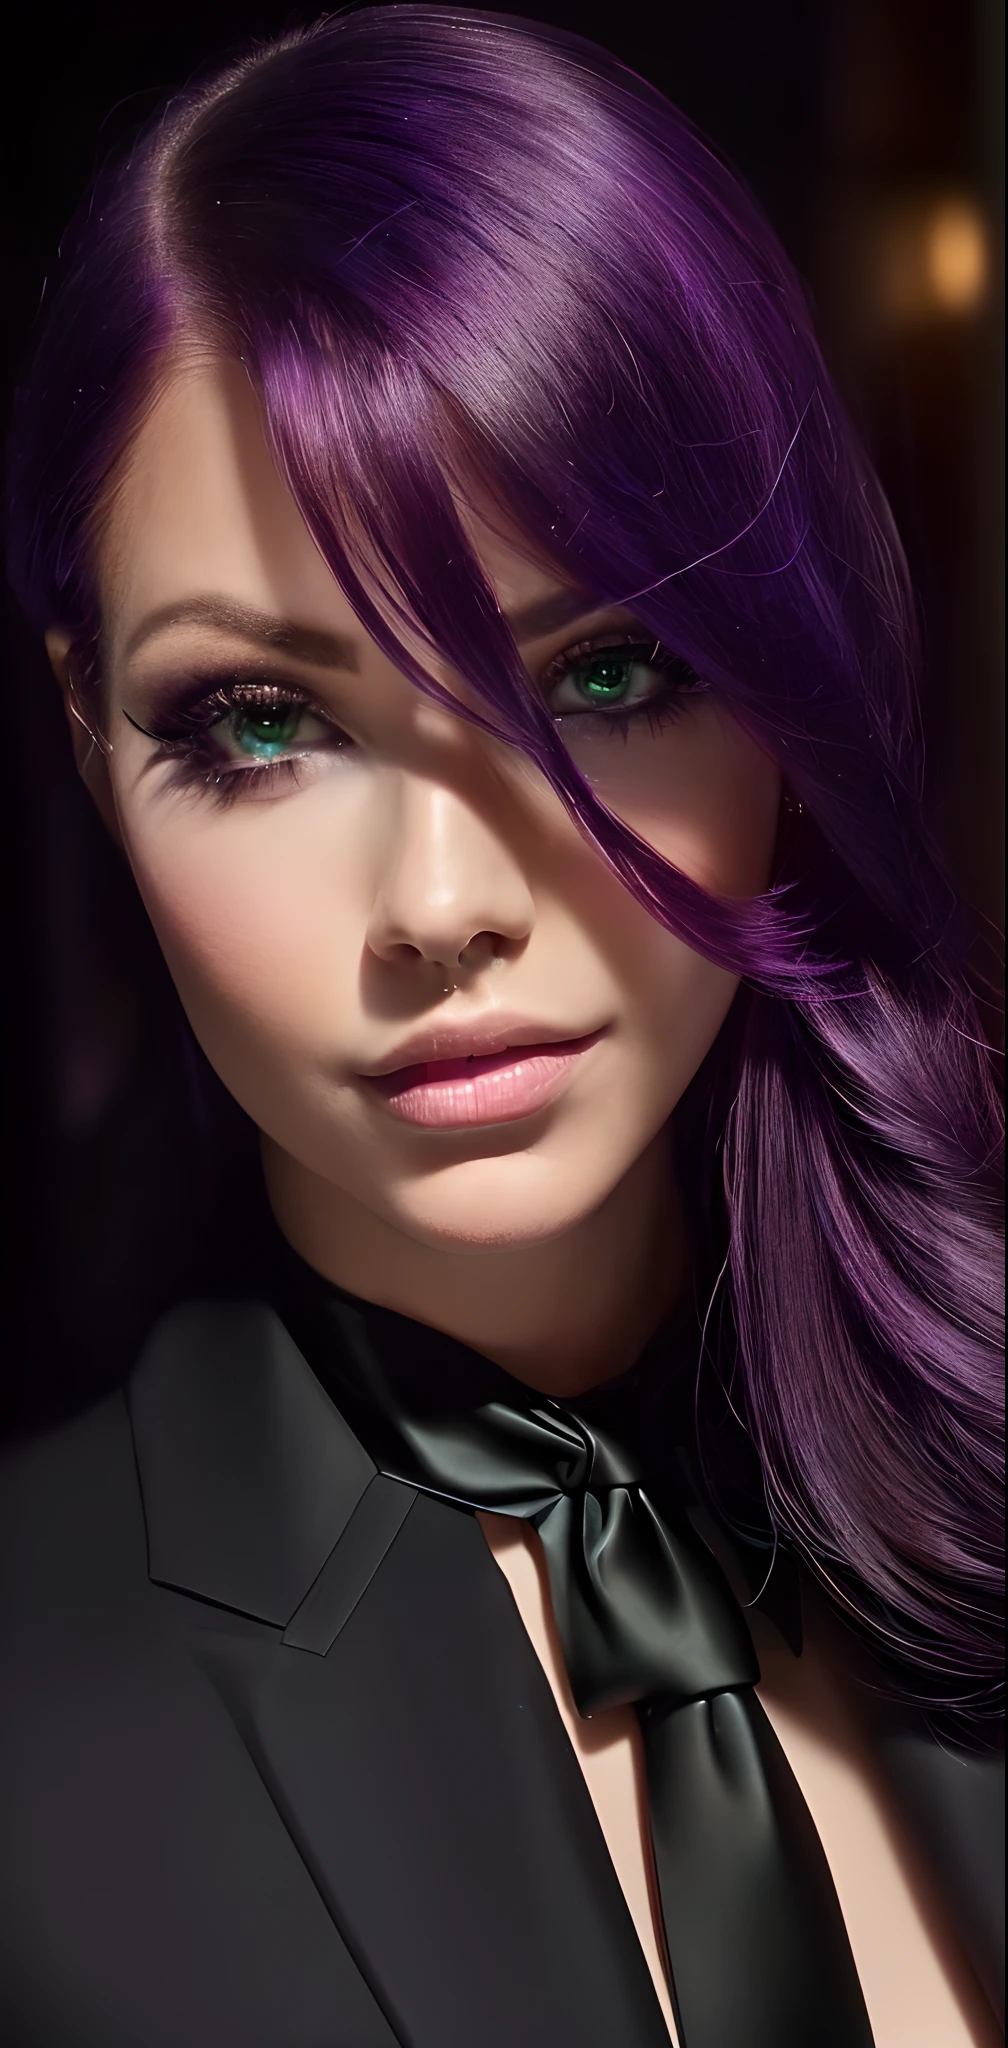 a Nahaufnahme einer Modelfrau with purple hair and a ((schwarze Krawatte)), Porträt Raum Kadett Mädchen, Porträt Ritter des Tierkreises Frau, Nahaufnahme einer Modelfrau, , mit leuchtend grünen Augen,